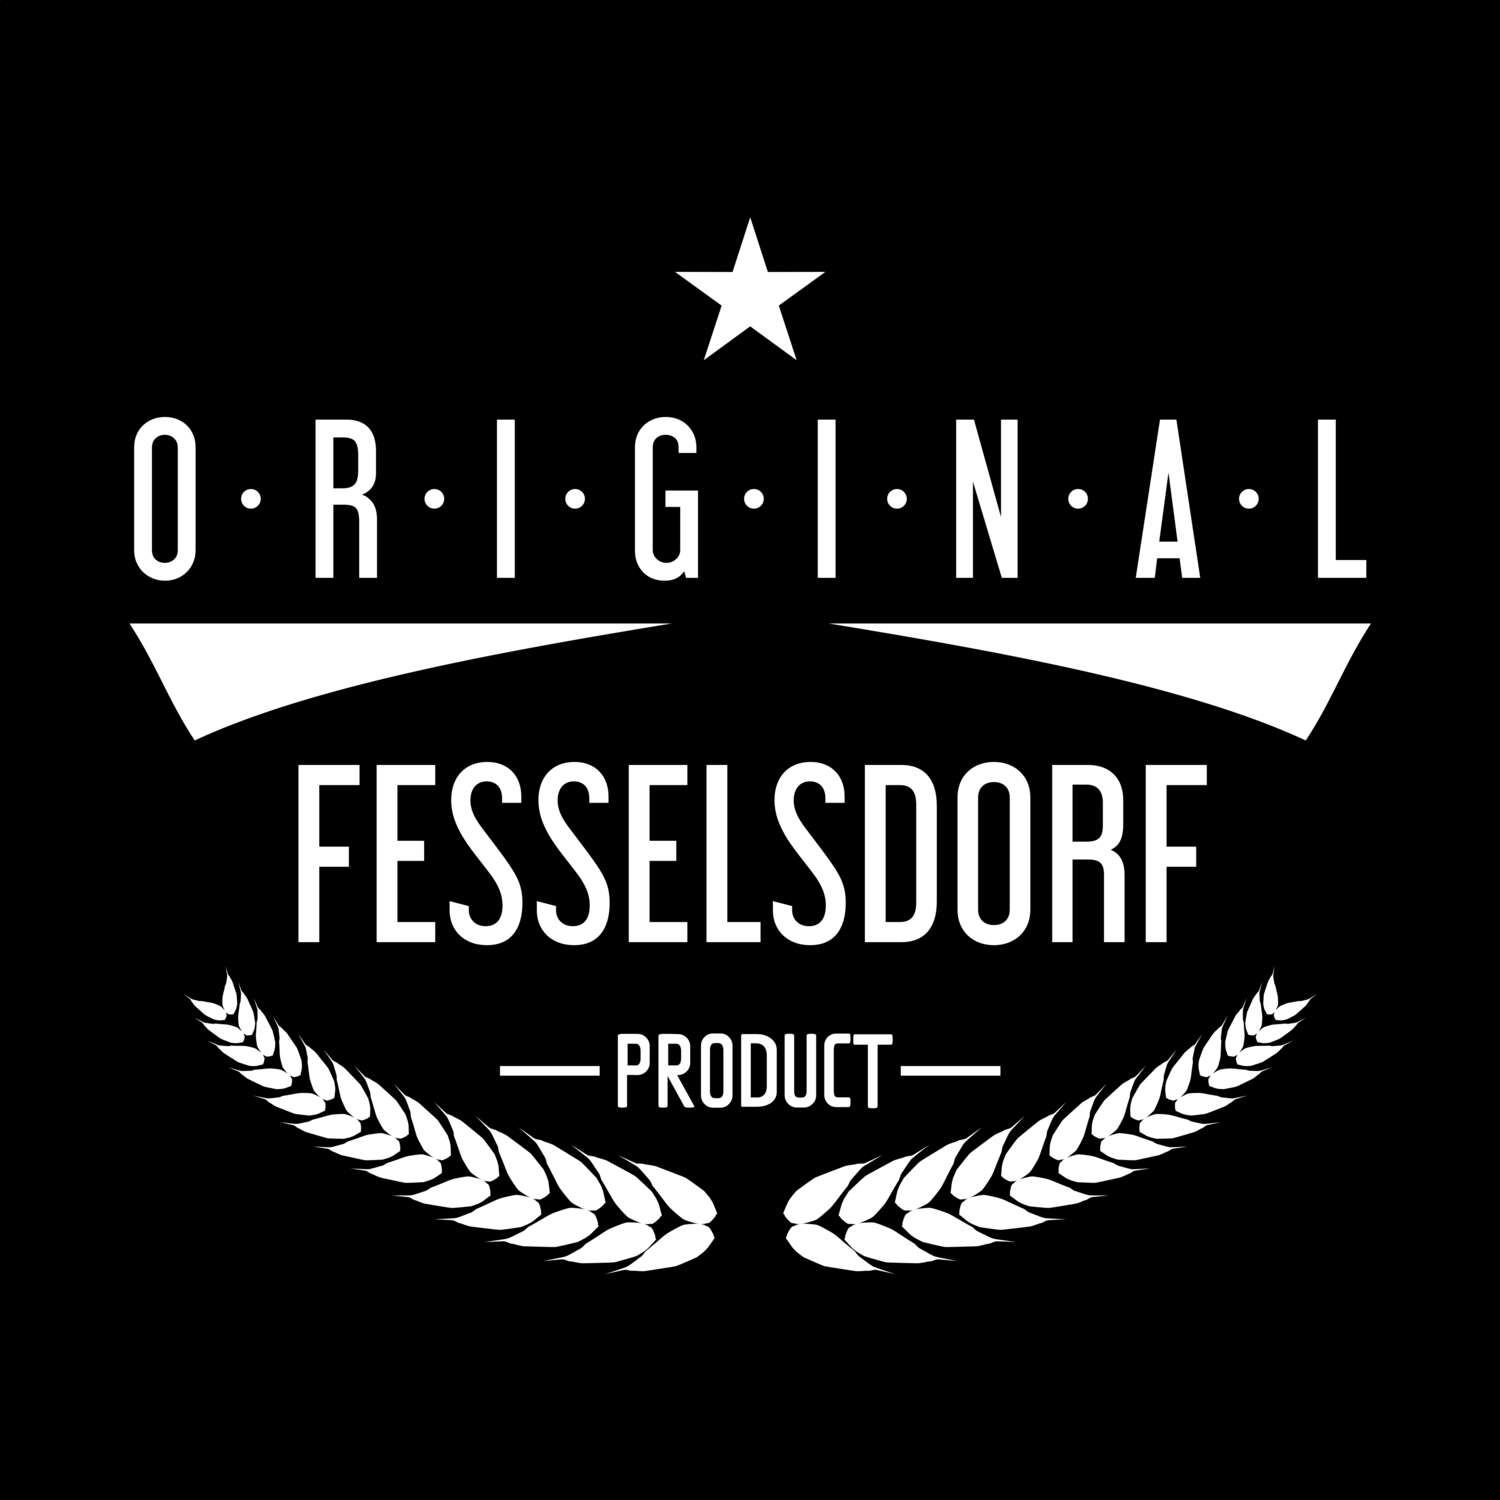 Fesselsdorf T-Shirt »Original Product«